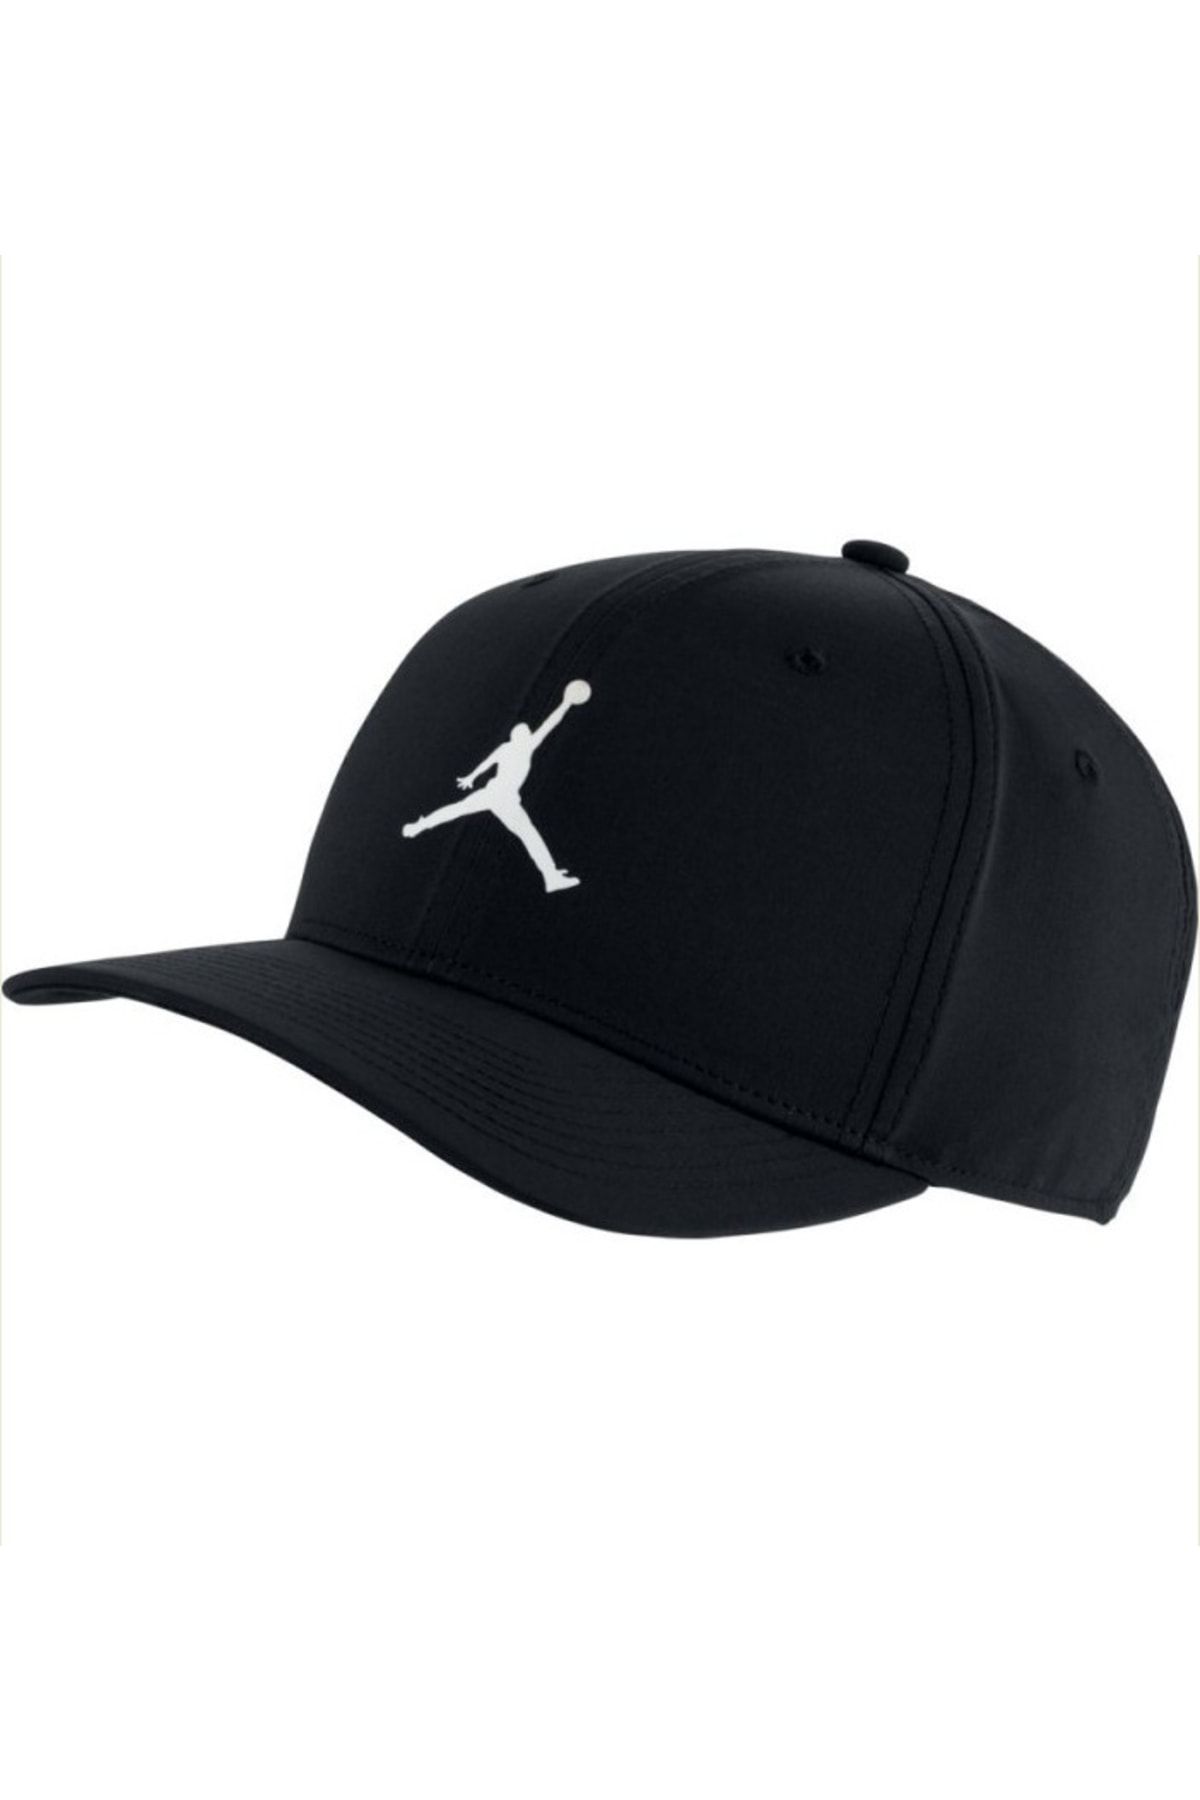 Nike Jordan Jan Curvebrım Adjustable Hat Şapka 9a0570-f66